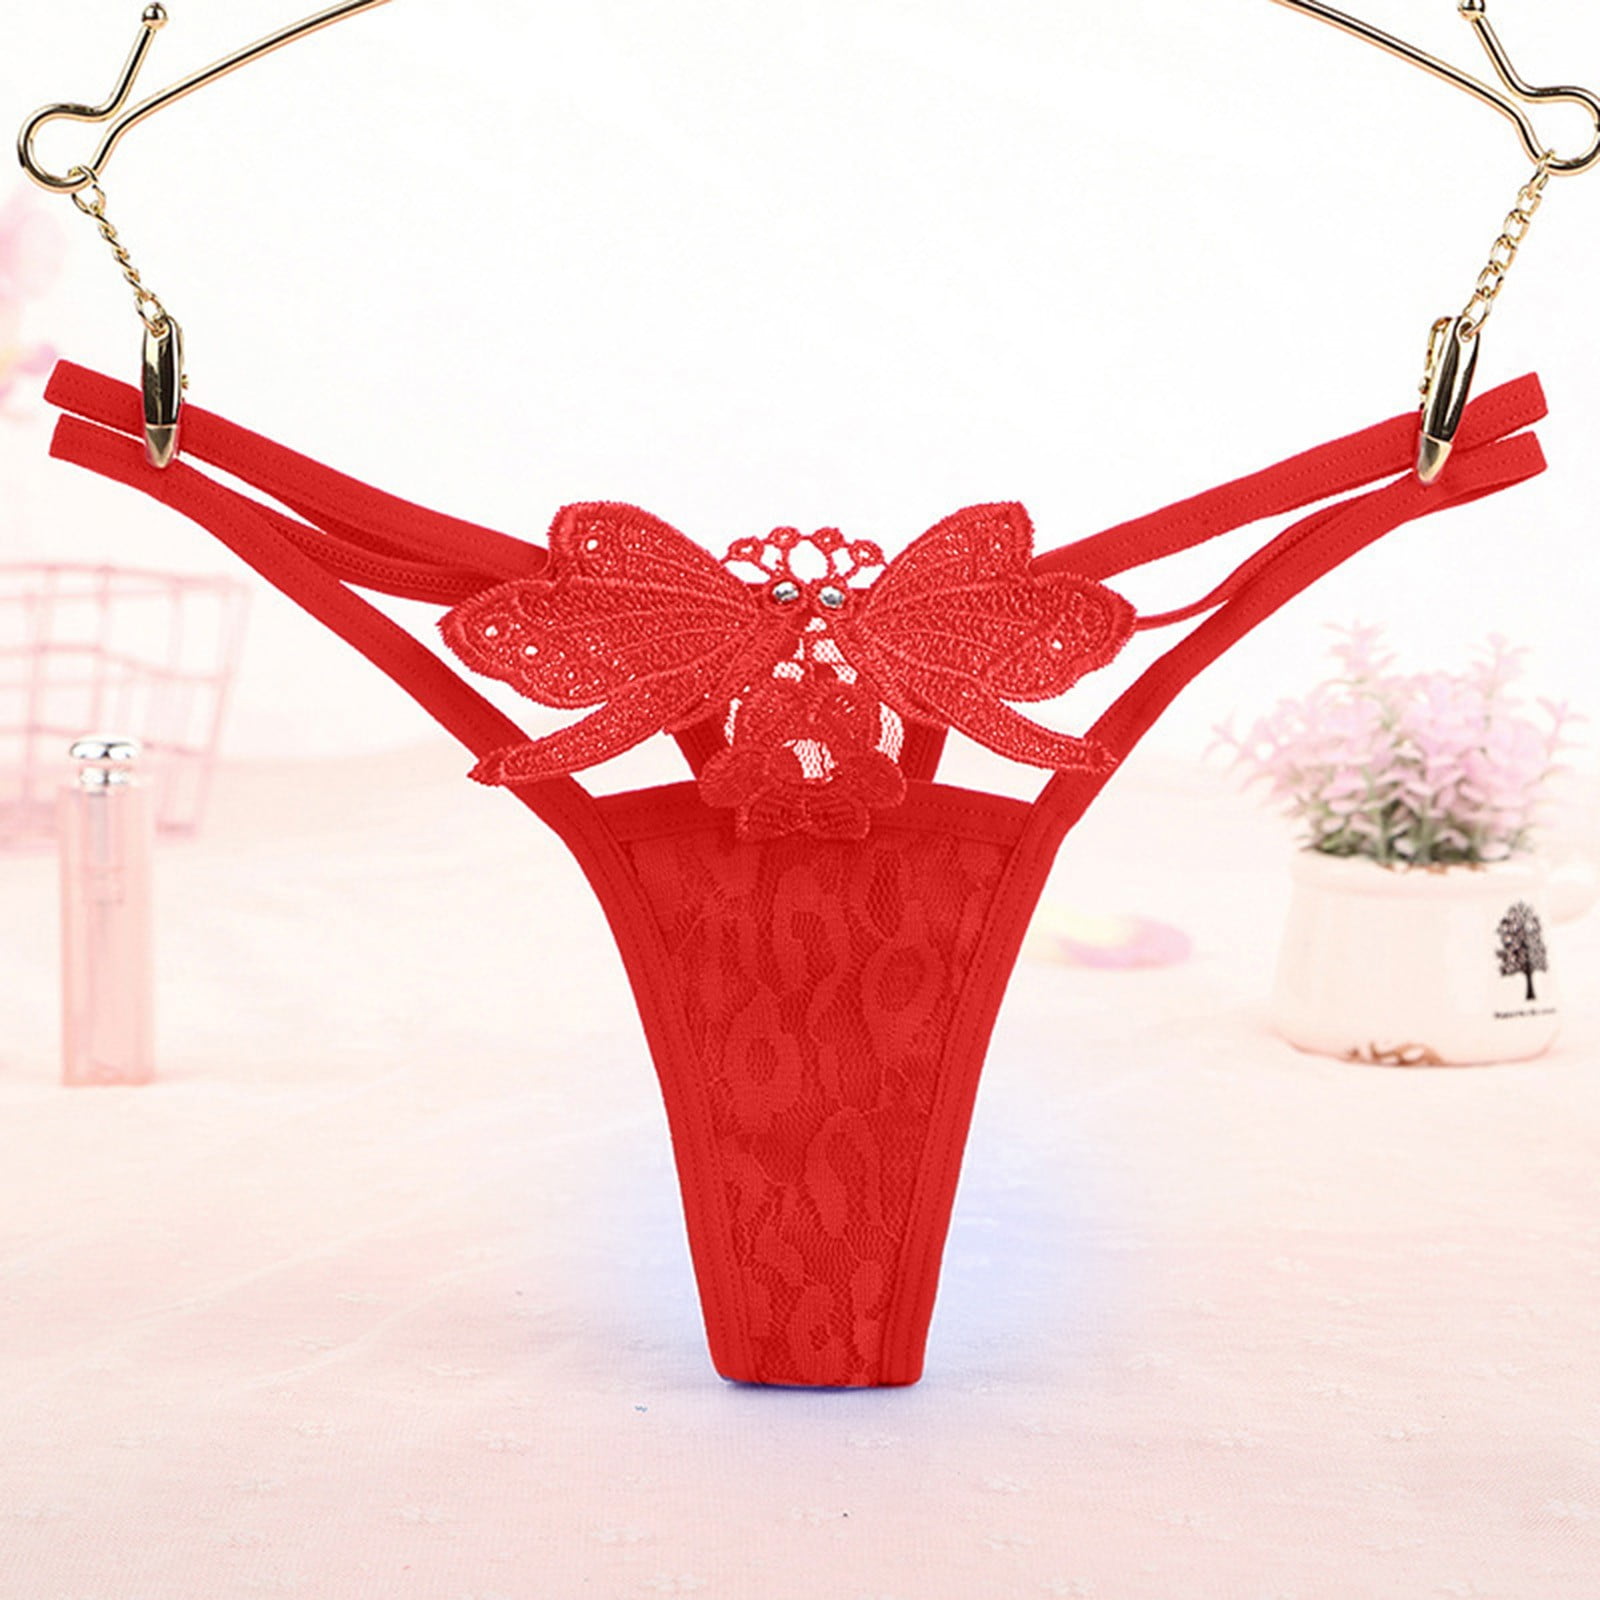 DealSeven fashion Women Thong Pink Panty - Buy DealSeven fashion